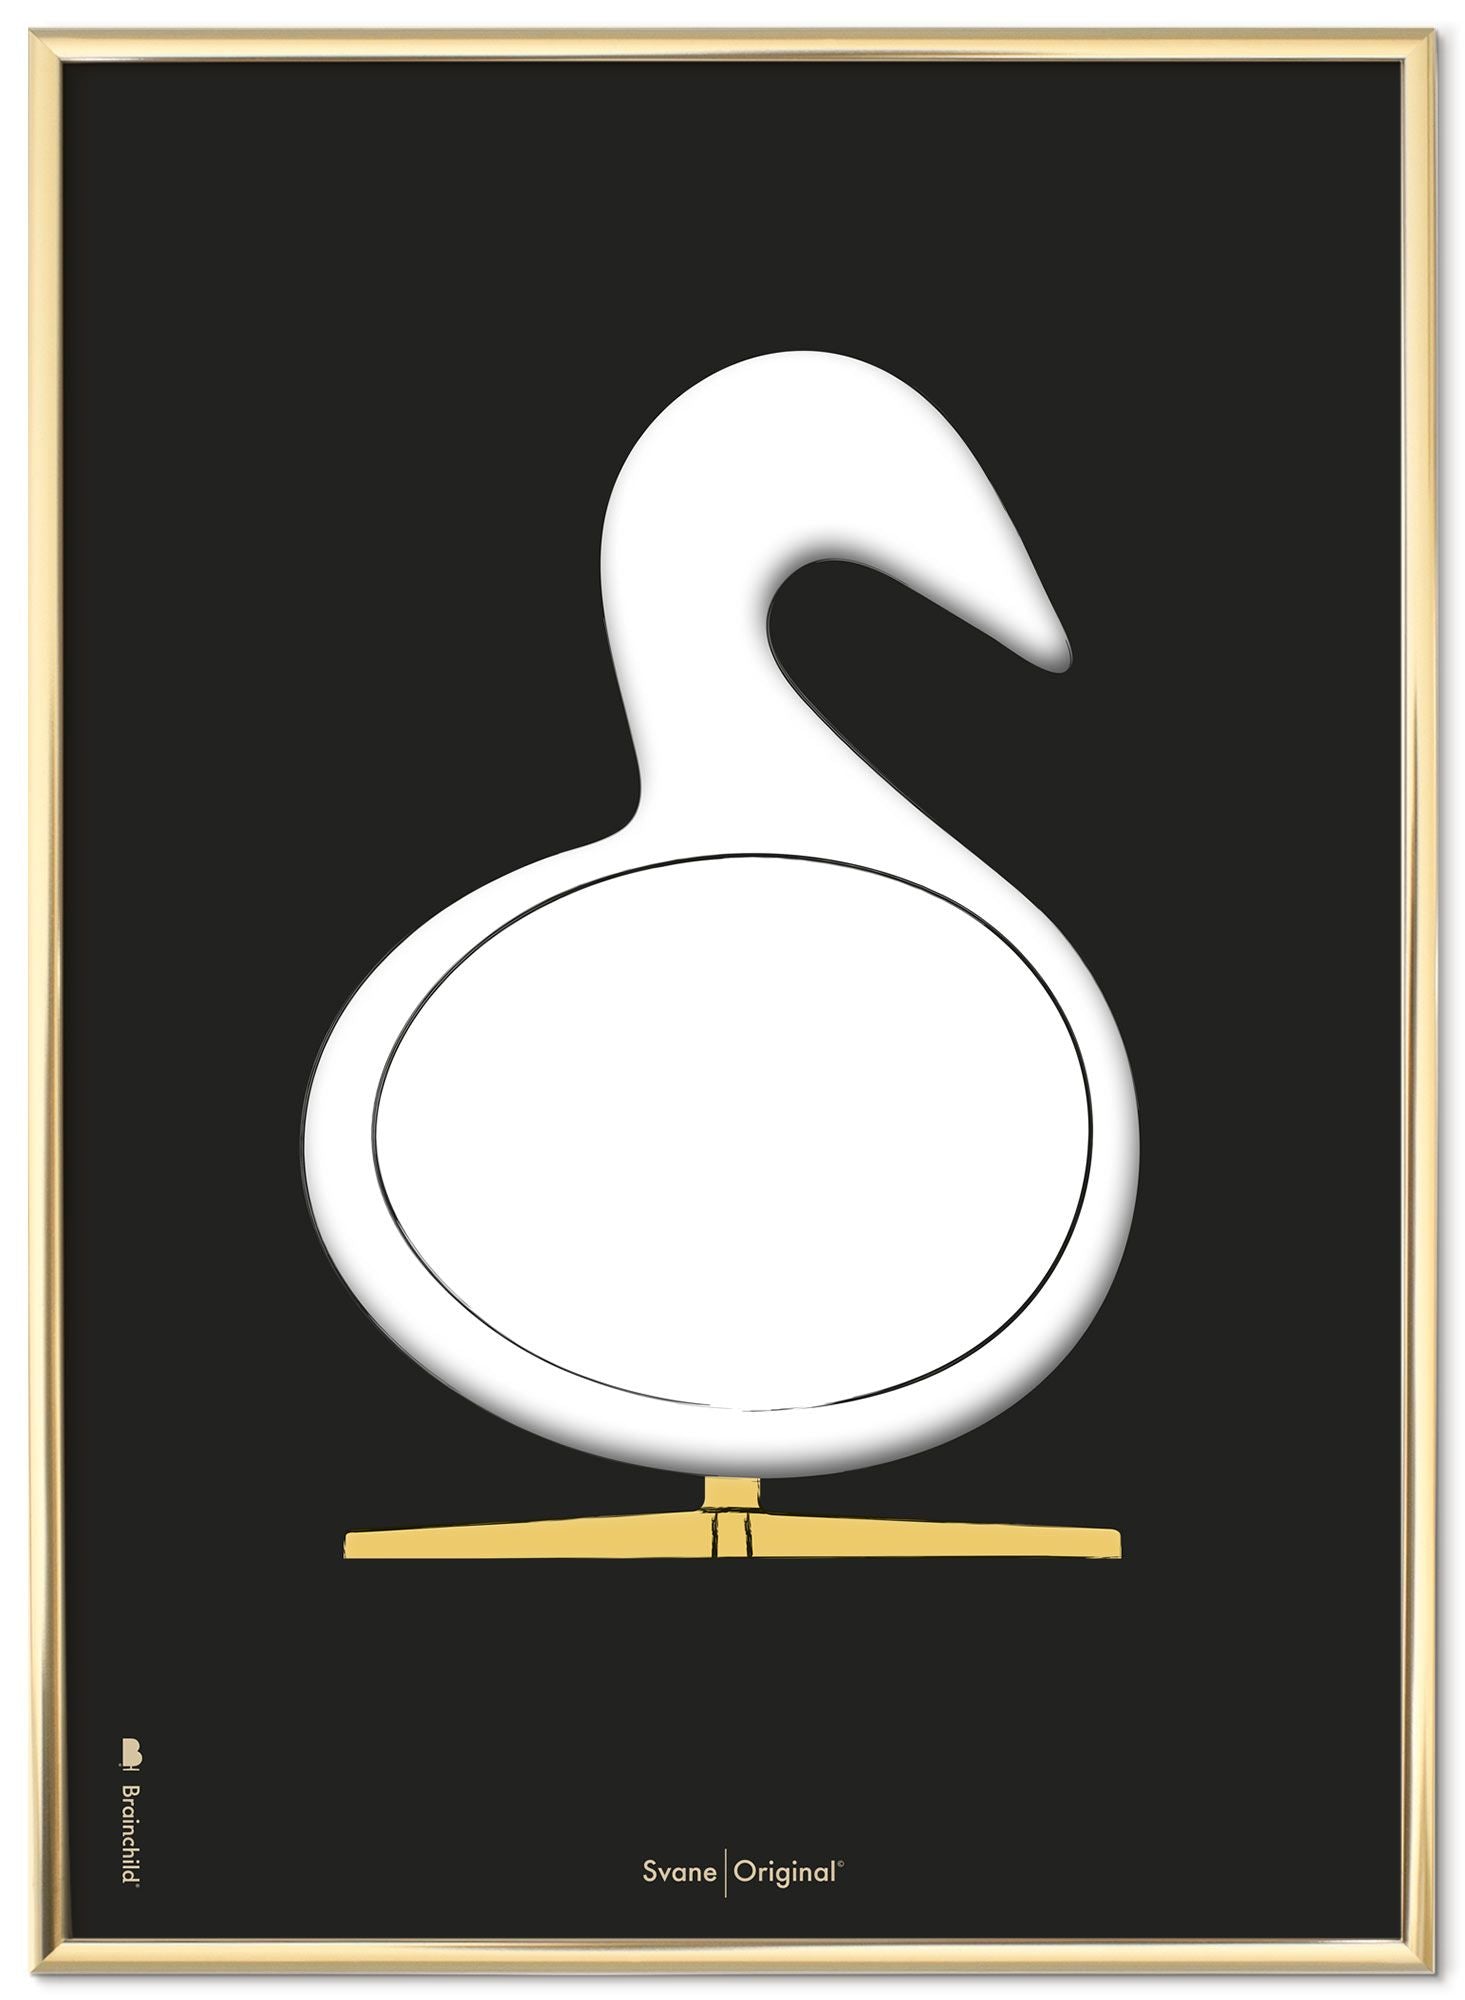 Brainchild Swan Design Sketch Poster Frame Made Of Brass Colored Metal 30x40 Cm, Black Background